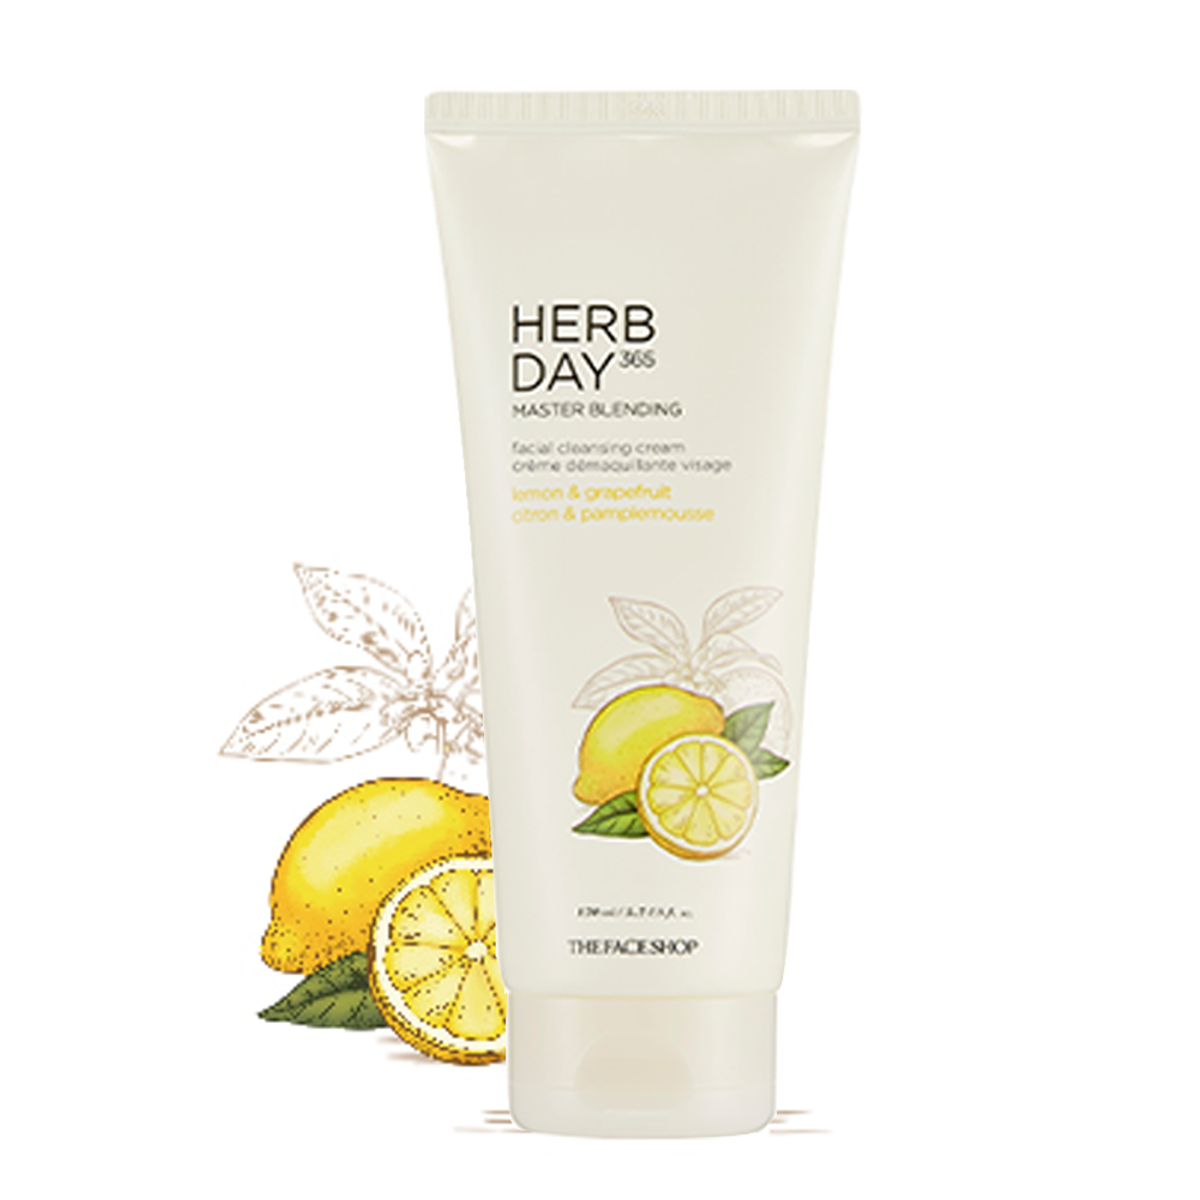 gift-kem-tay-trang-herb-day-365-master-blending-facial-cleansing-cream-lemon-grapefruit-170ml-1